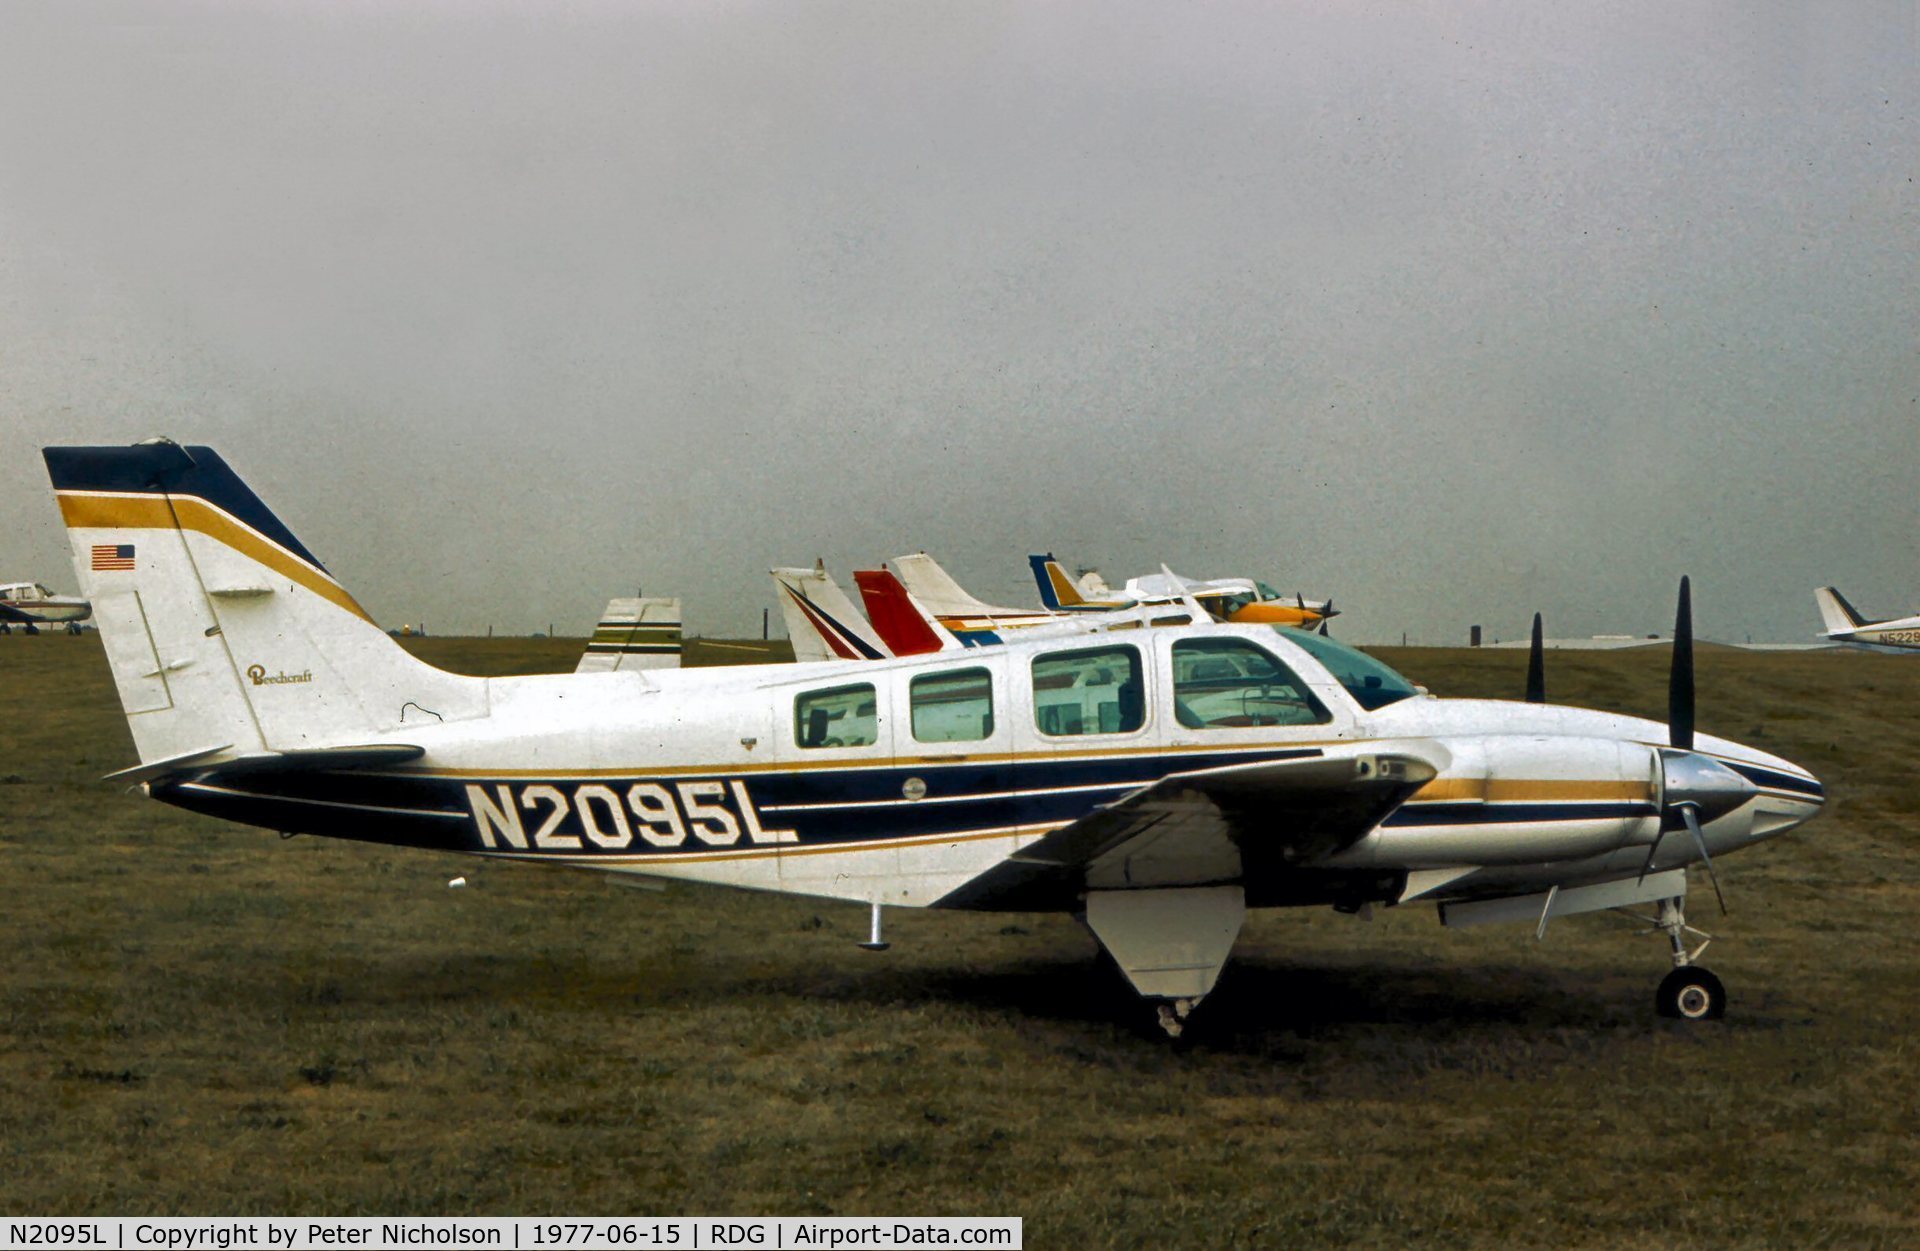 N2095L, 1976 Beech 58TC Baron C/N TK-21, Beech 58TC Baron seen at the 1977 Reading Airshow.